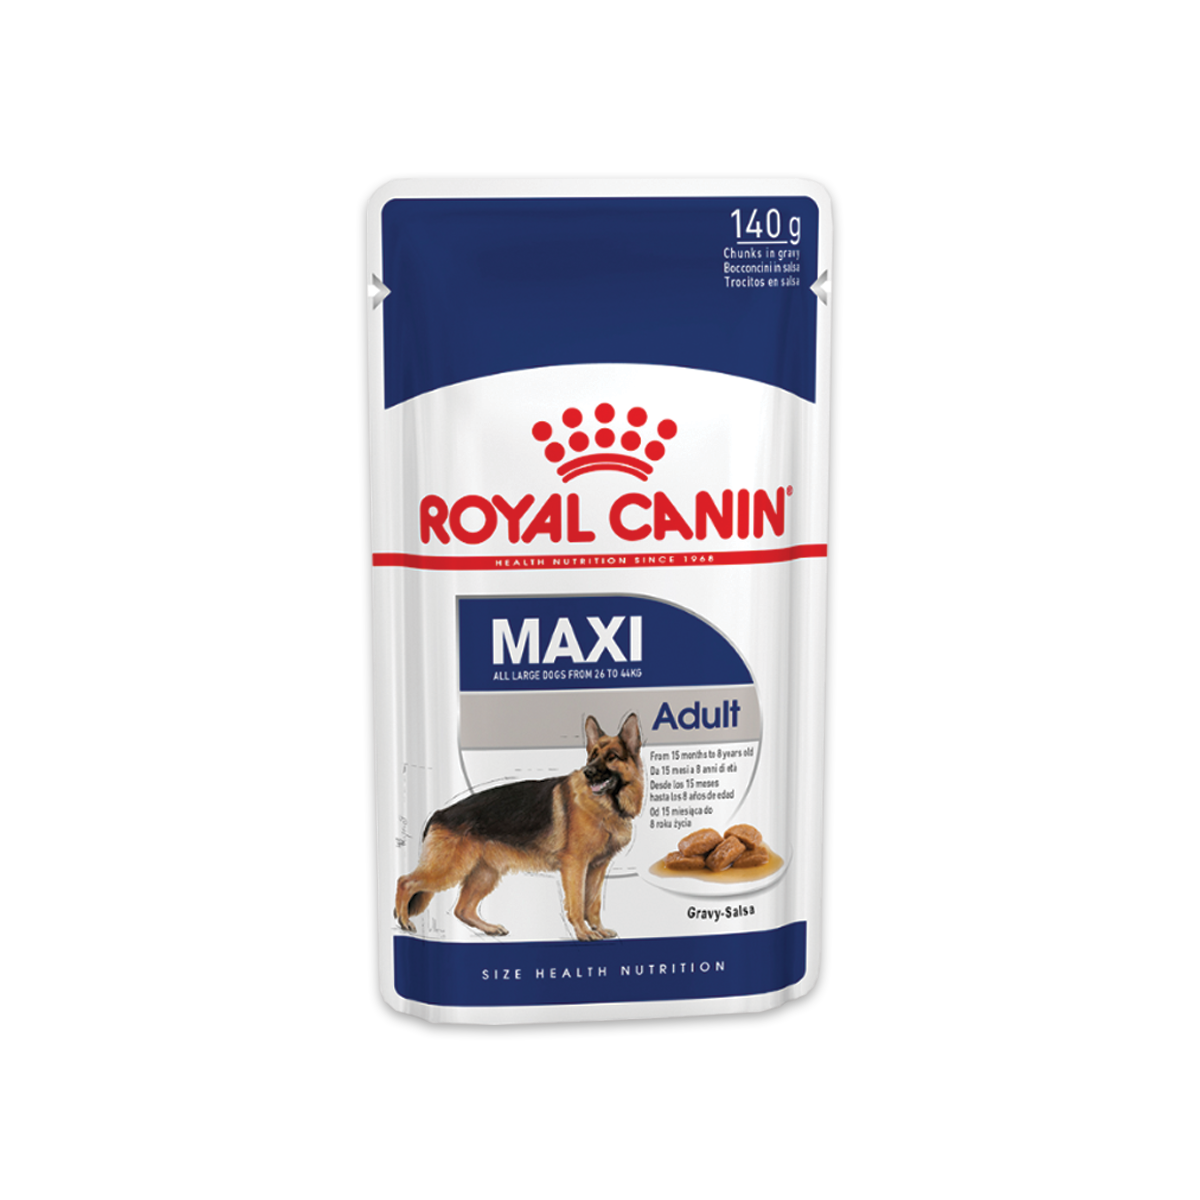 Royal Canin Pouch SHW Maxi Adult โรยัล คานิน อาหารชนิดเปียกสำหรับสุนัขโตพันธุ์ใหญ่ อายุ 15 เดือน ถึง 8 ปี